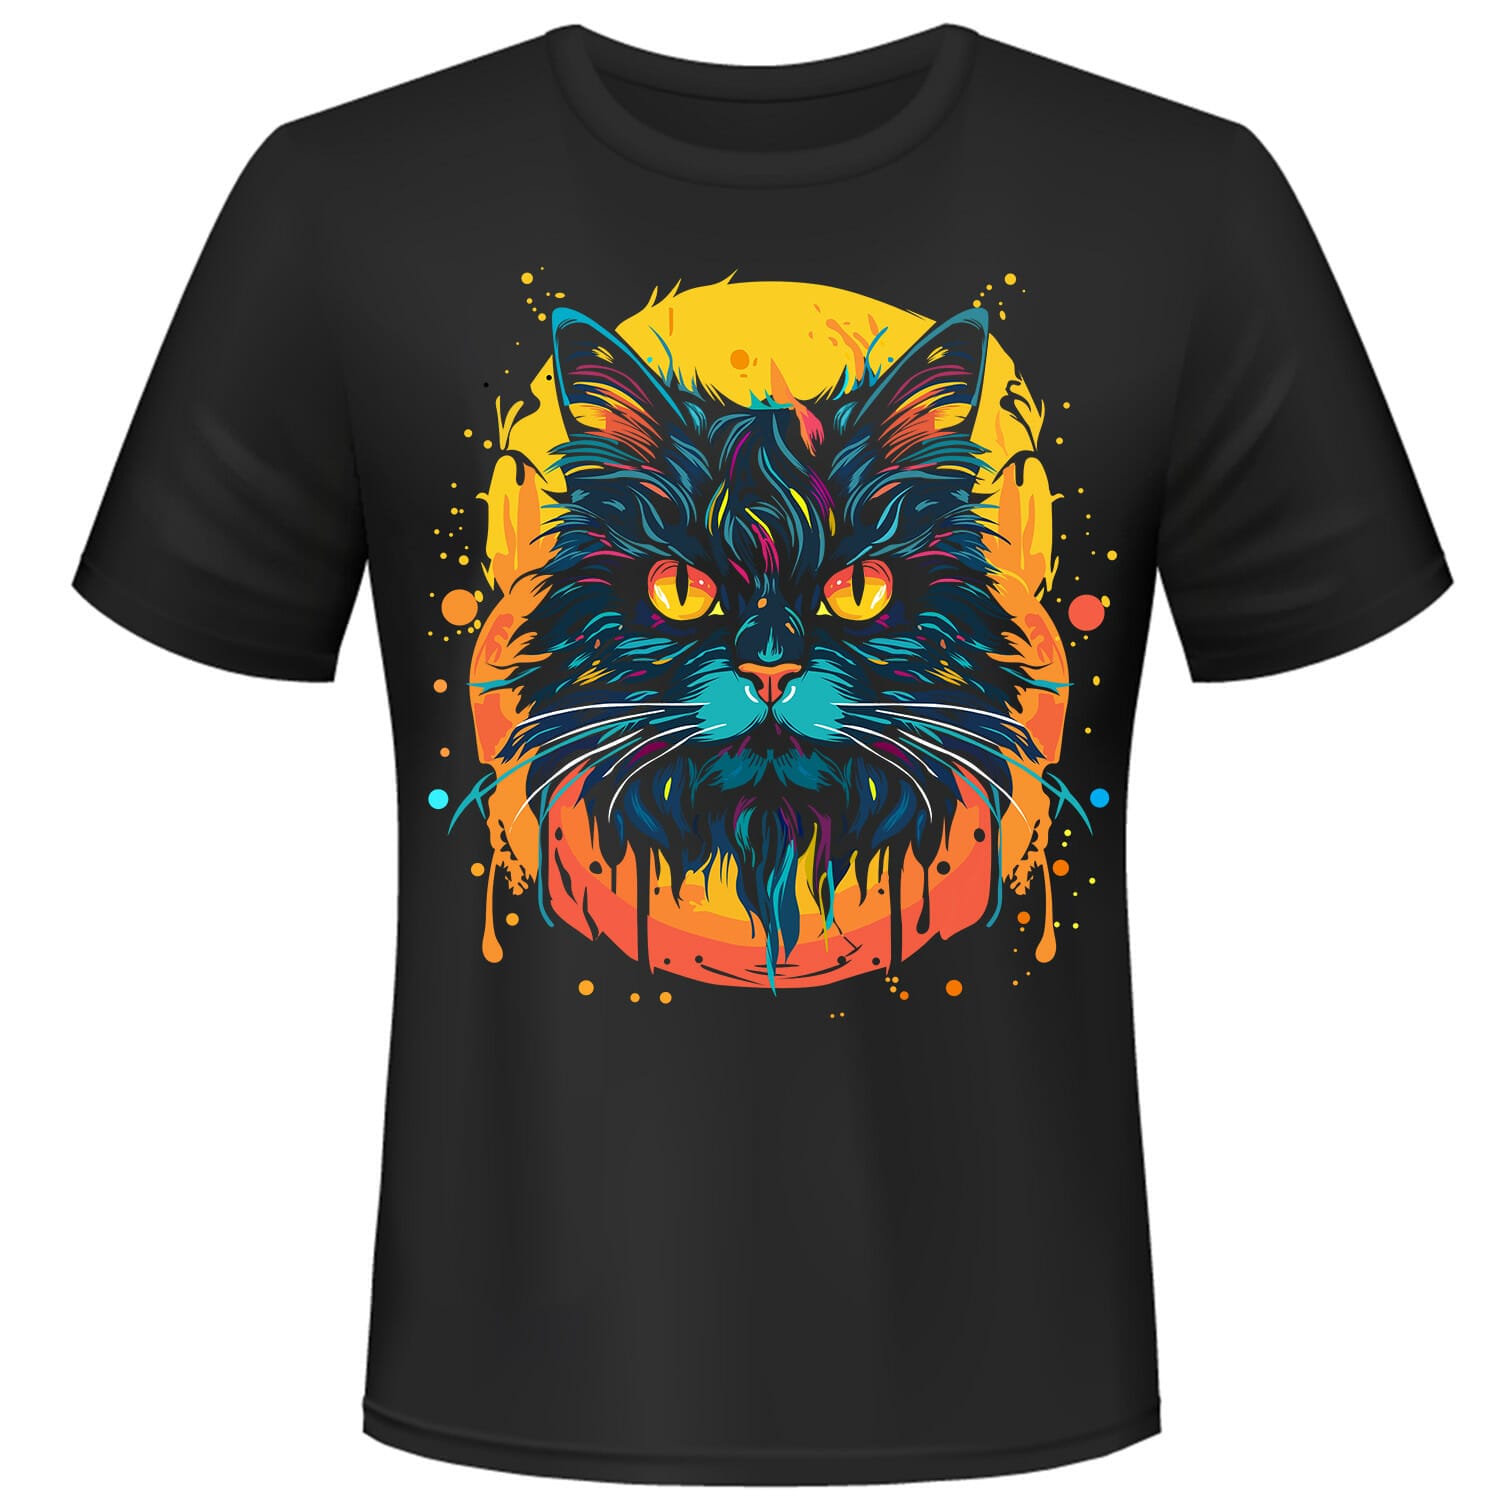 cat with pop art style.shirt design